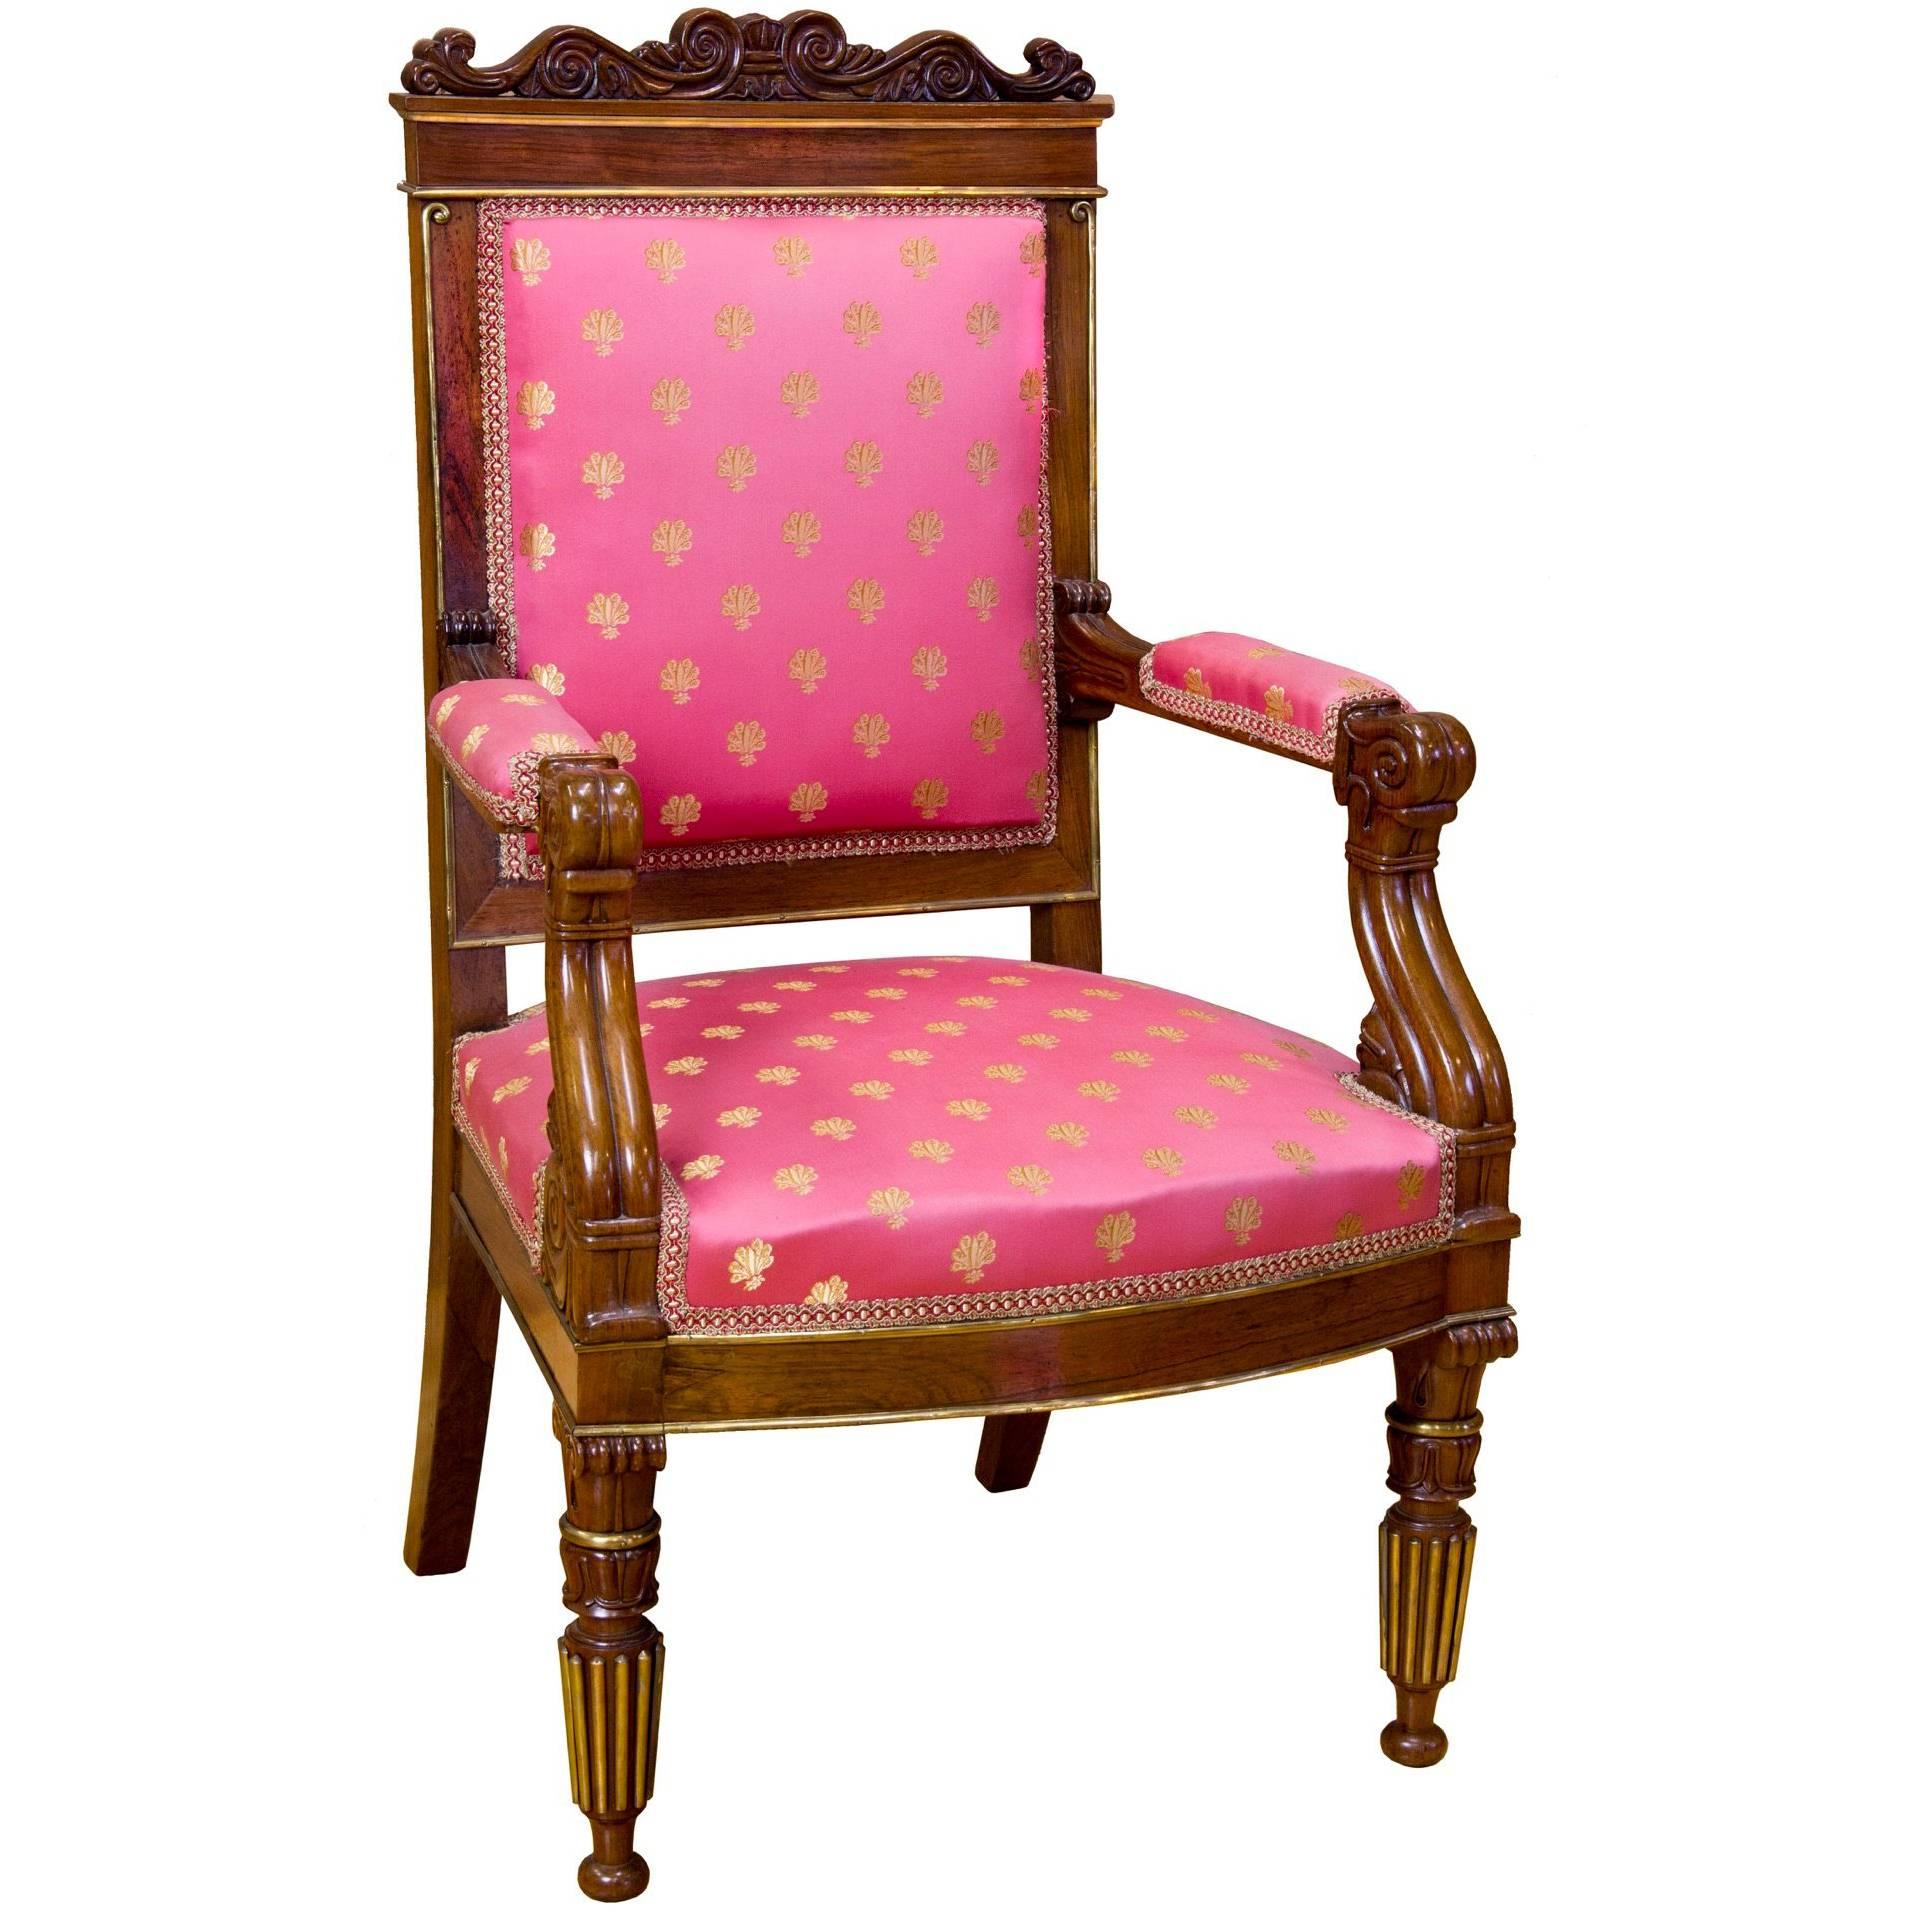 Fine Regency/Classical Gilt-Mounted Armchair, England, circa 1810